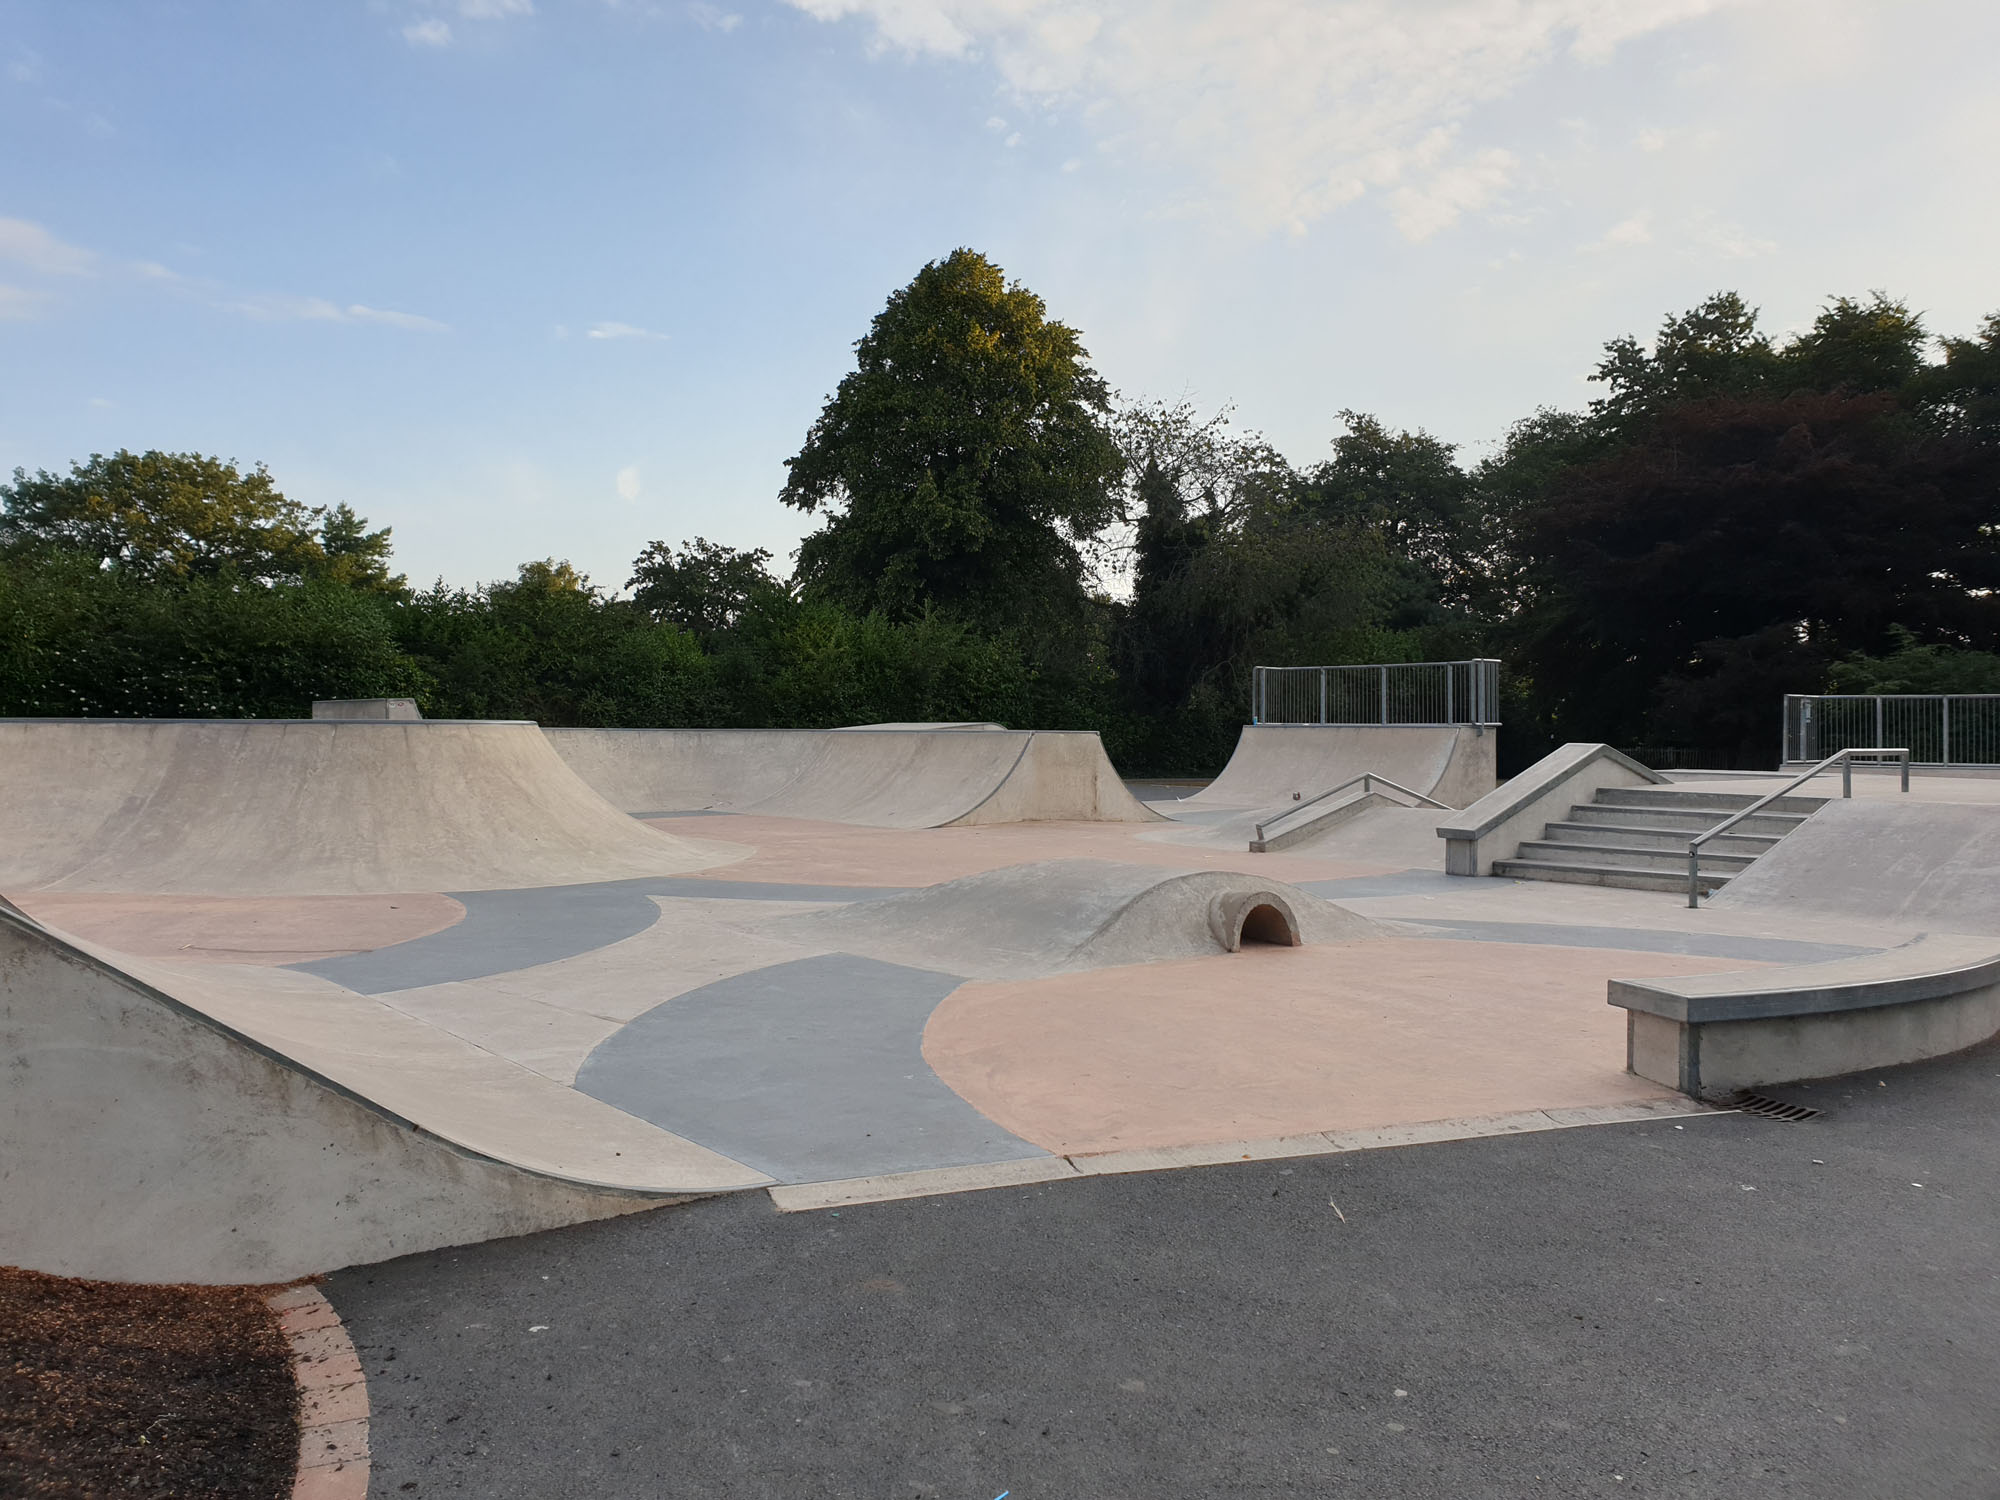 alexandra park skatepark wigan review tips skateboarding in greater manchester u k